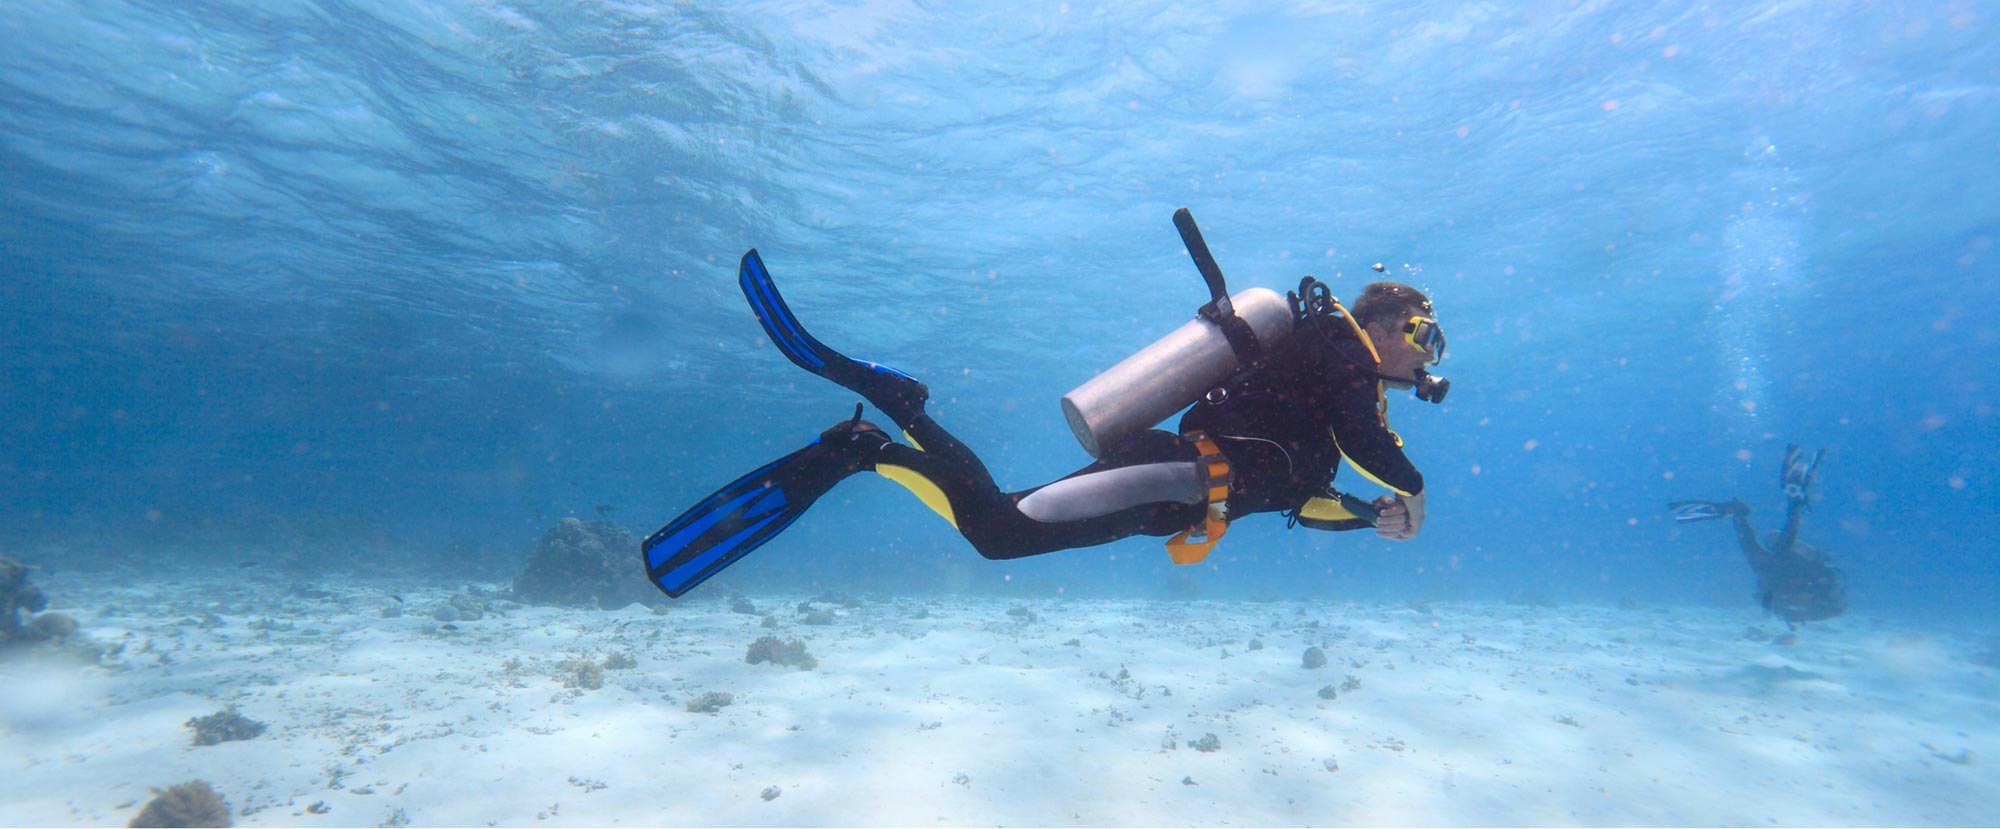 Details about   Scuba Diving Long Fins Adjustable Snorkeling Swim Flippers Diving Boots Shoes 